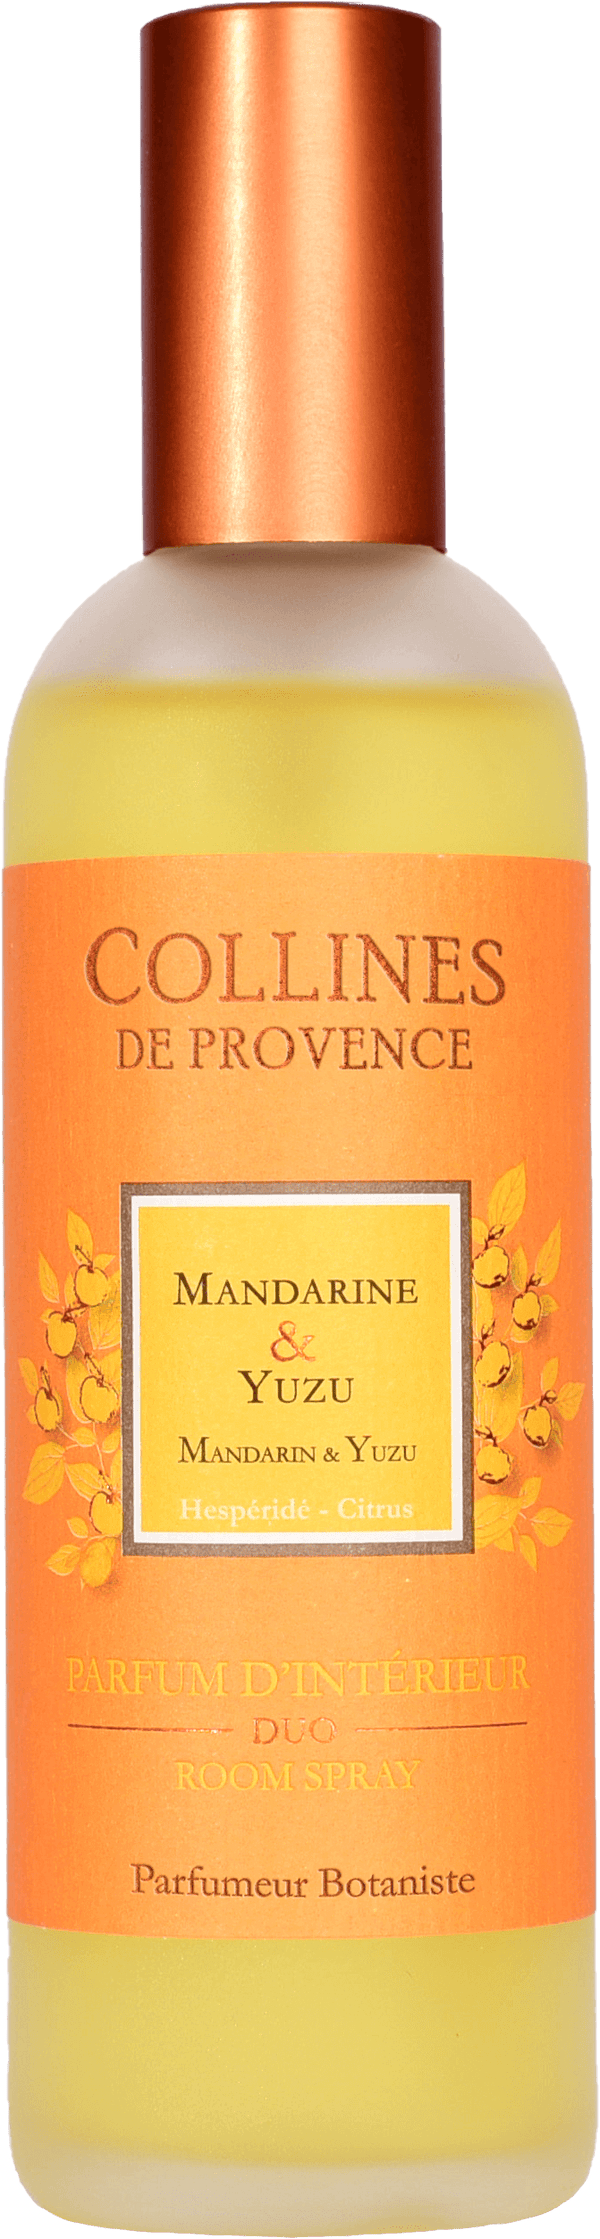 Raumspray Mandarine & Yuzu 100 ml - Collines